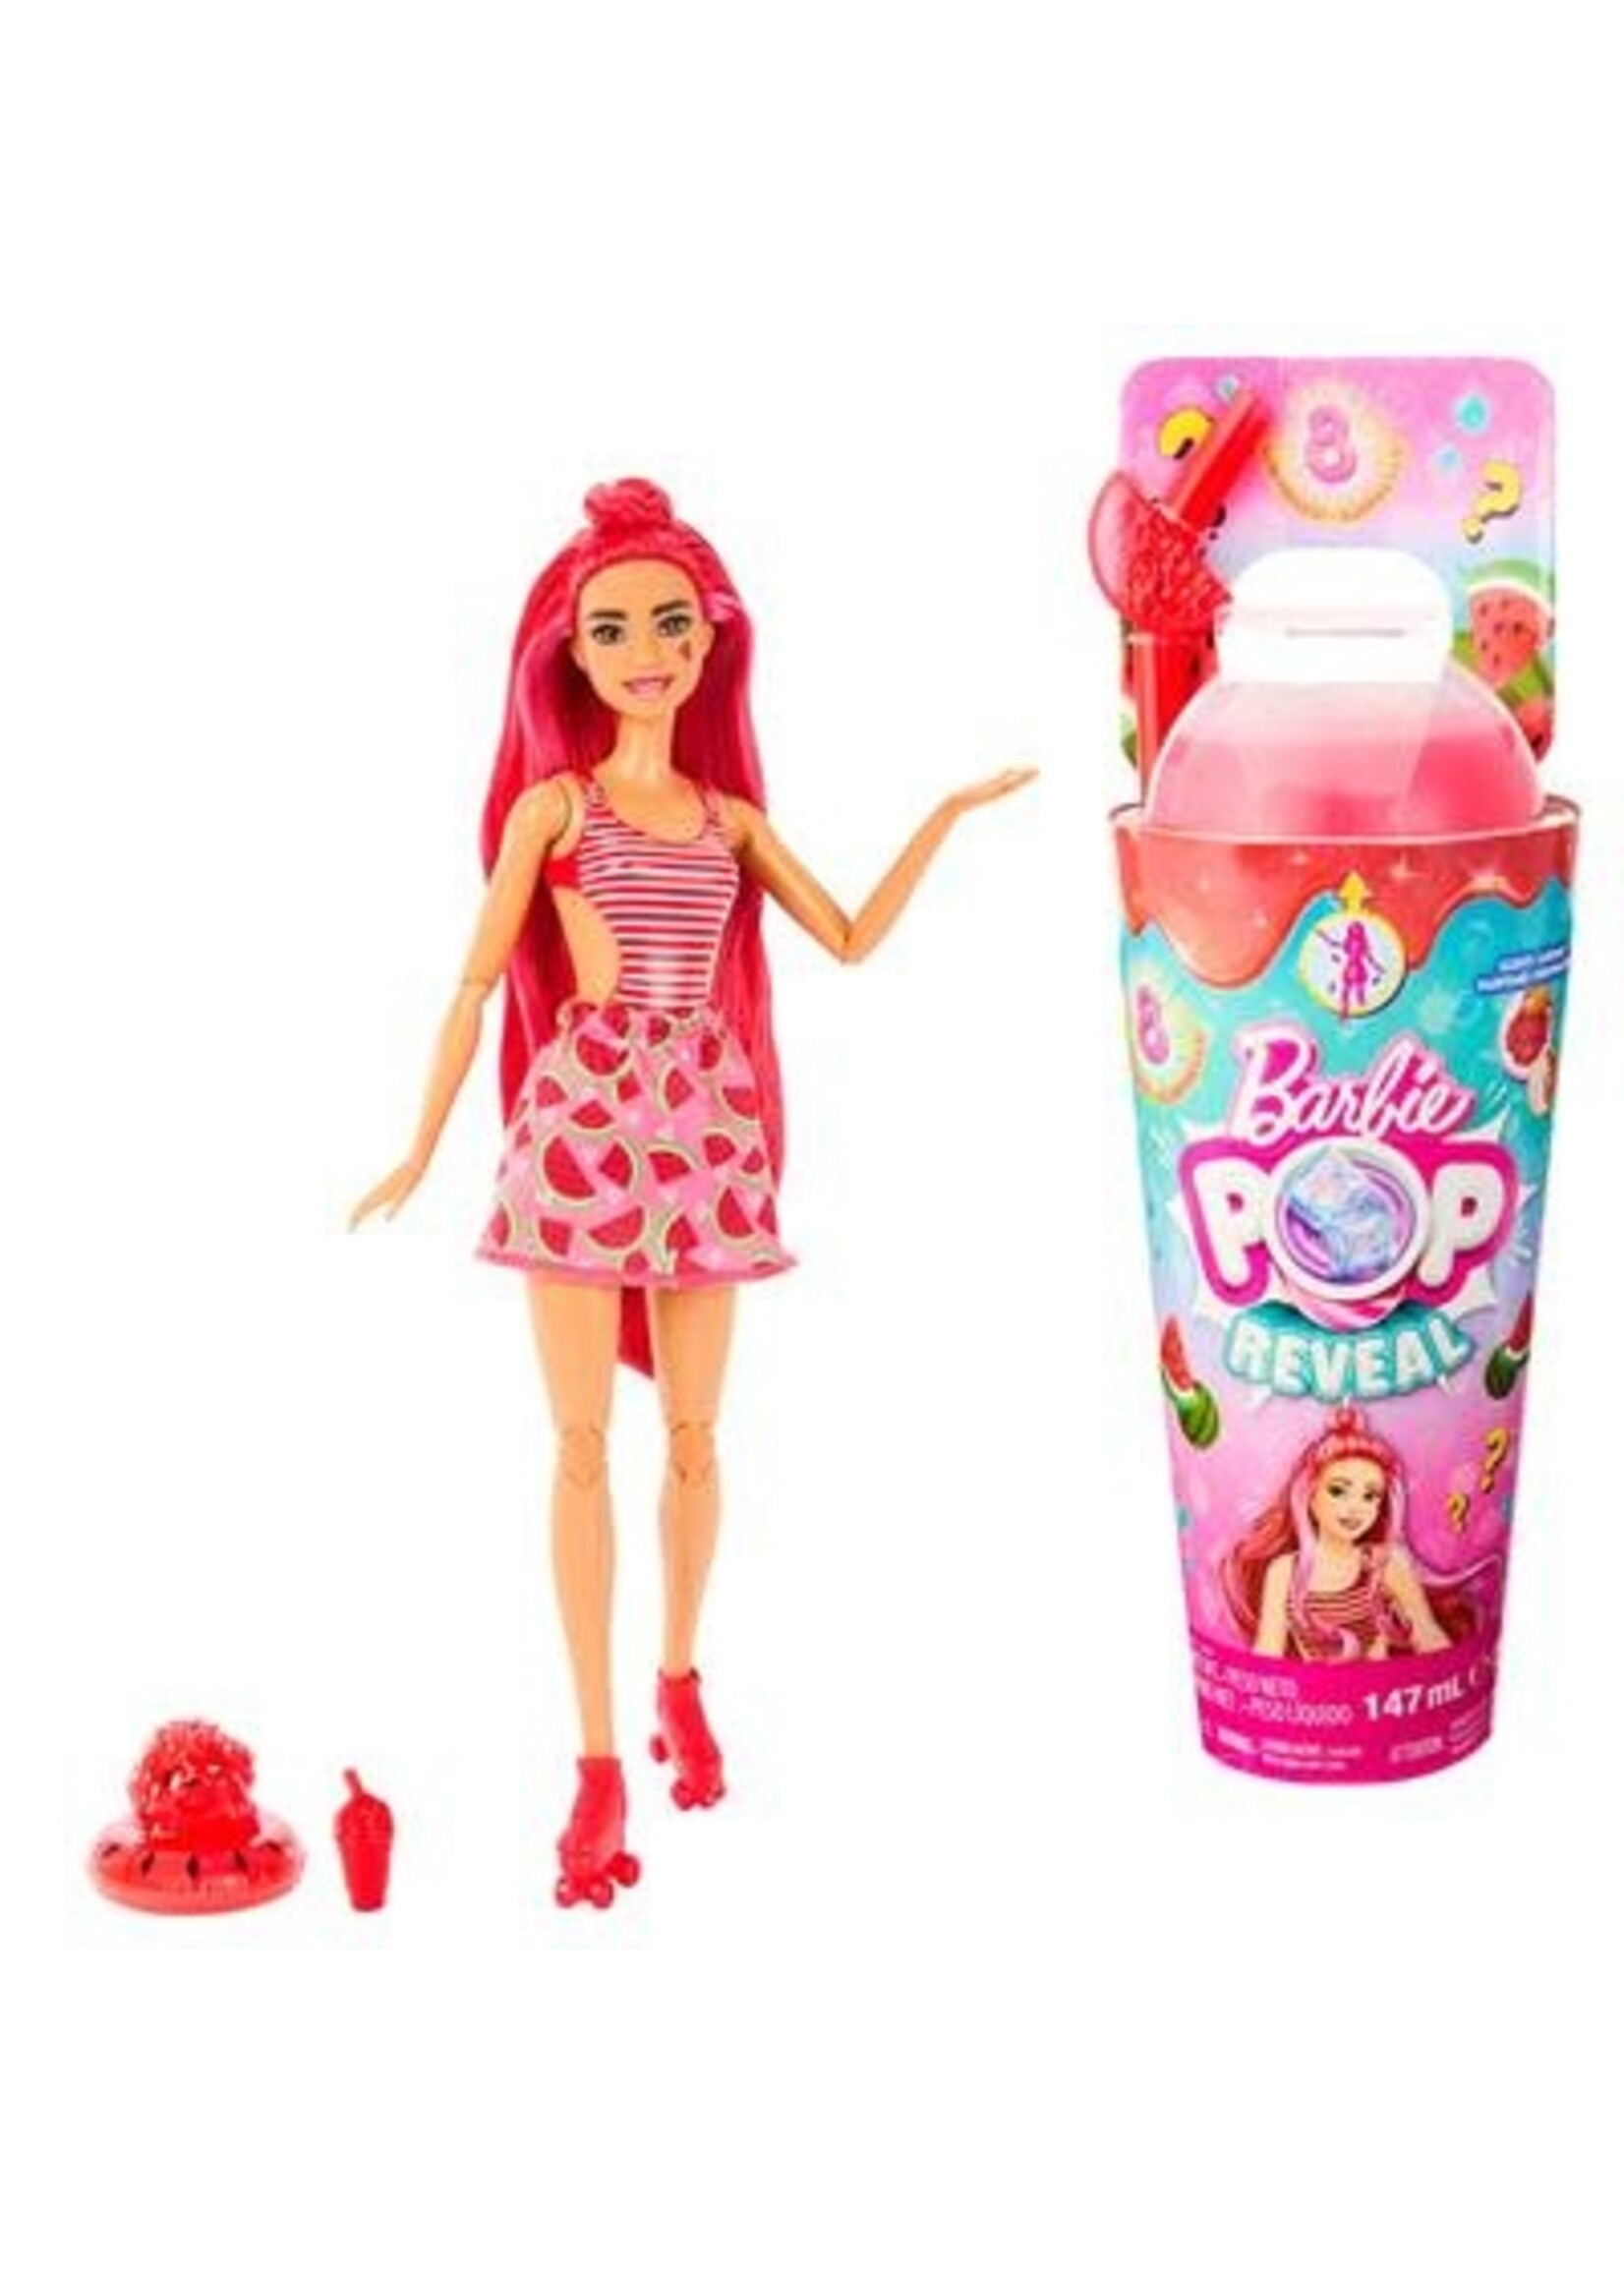 Mattel Games Barbie Pop Reveal Watermelon